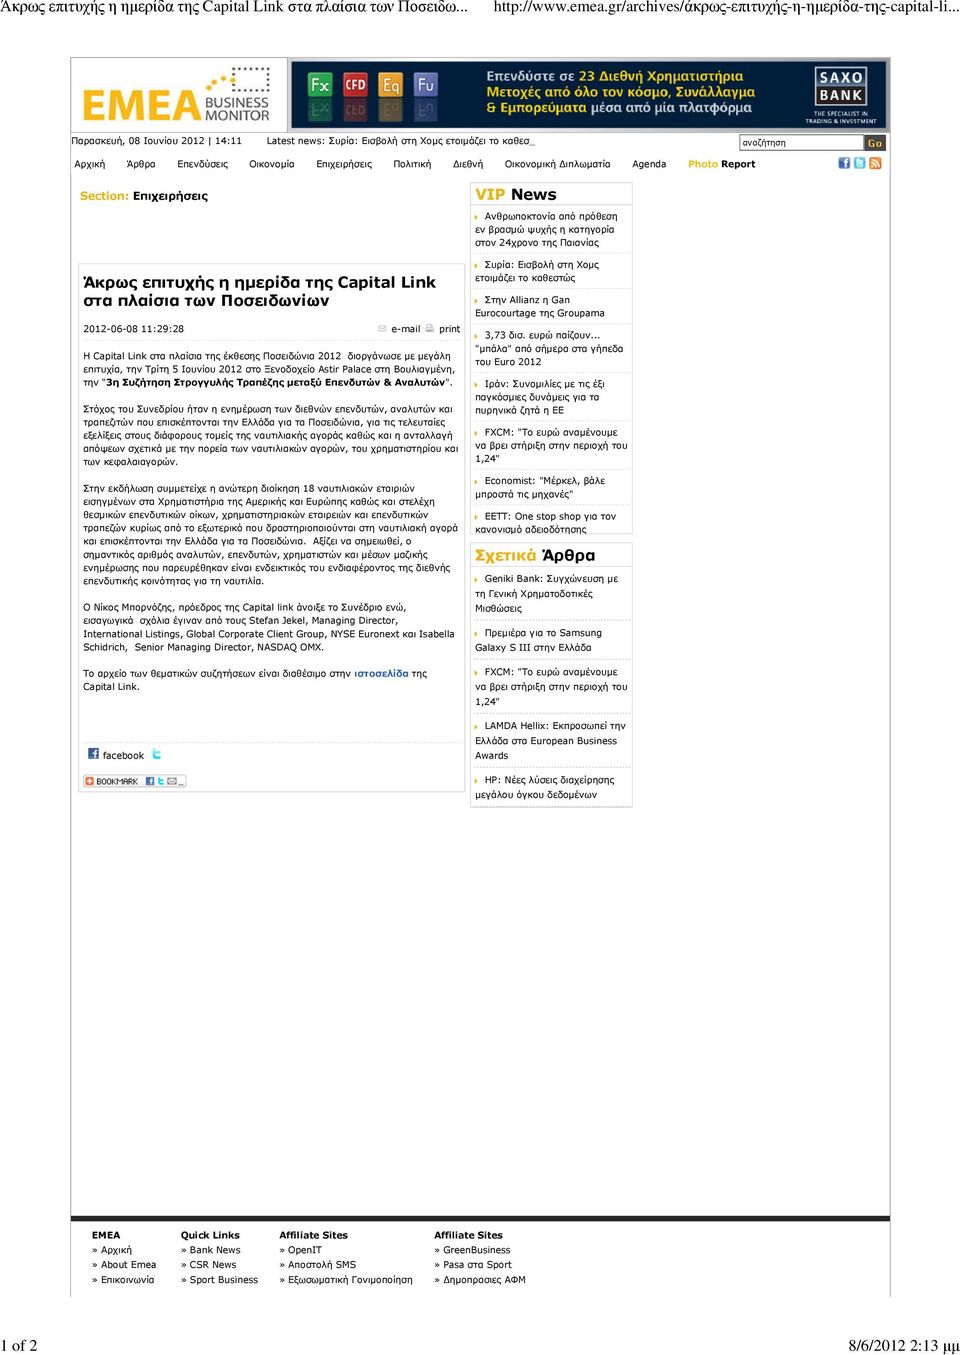 Agenda Photo Report Section: Επιχειρήσεις Άκρως επιτυχής η ηµερίδα της Capital Link στα πλαίσια των Ποσειδωνίων 2012-06-08 11:29:28 e-mail print Η Capital Link στα πλαίσια της έκθεσης Ποσειδώνια 2012